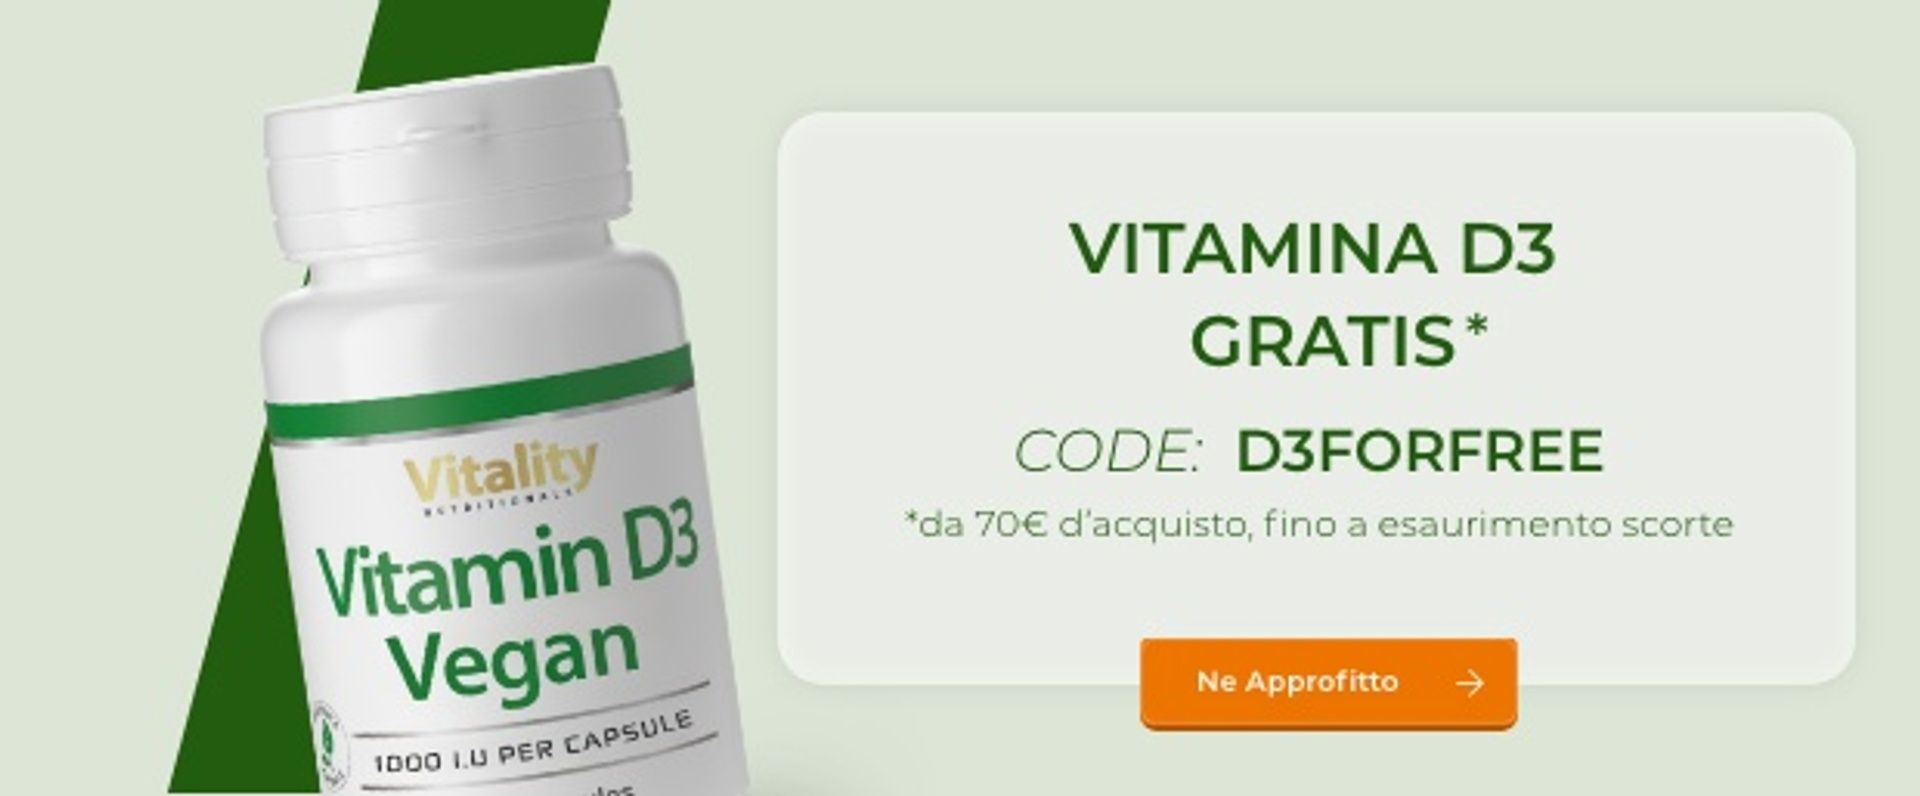 VE_GWP_Vitamin-D3_Vegan_1000_IE_620x257_IT.png